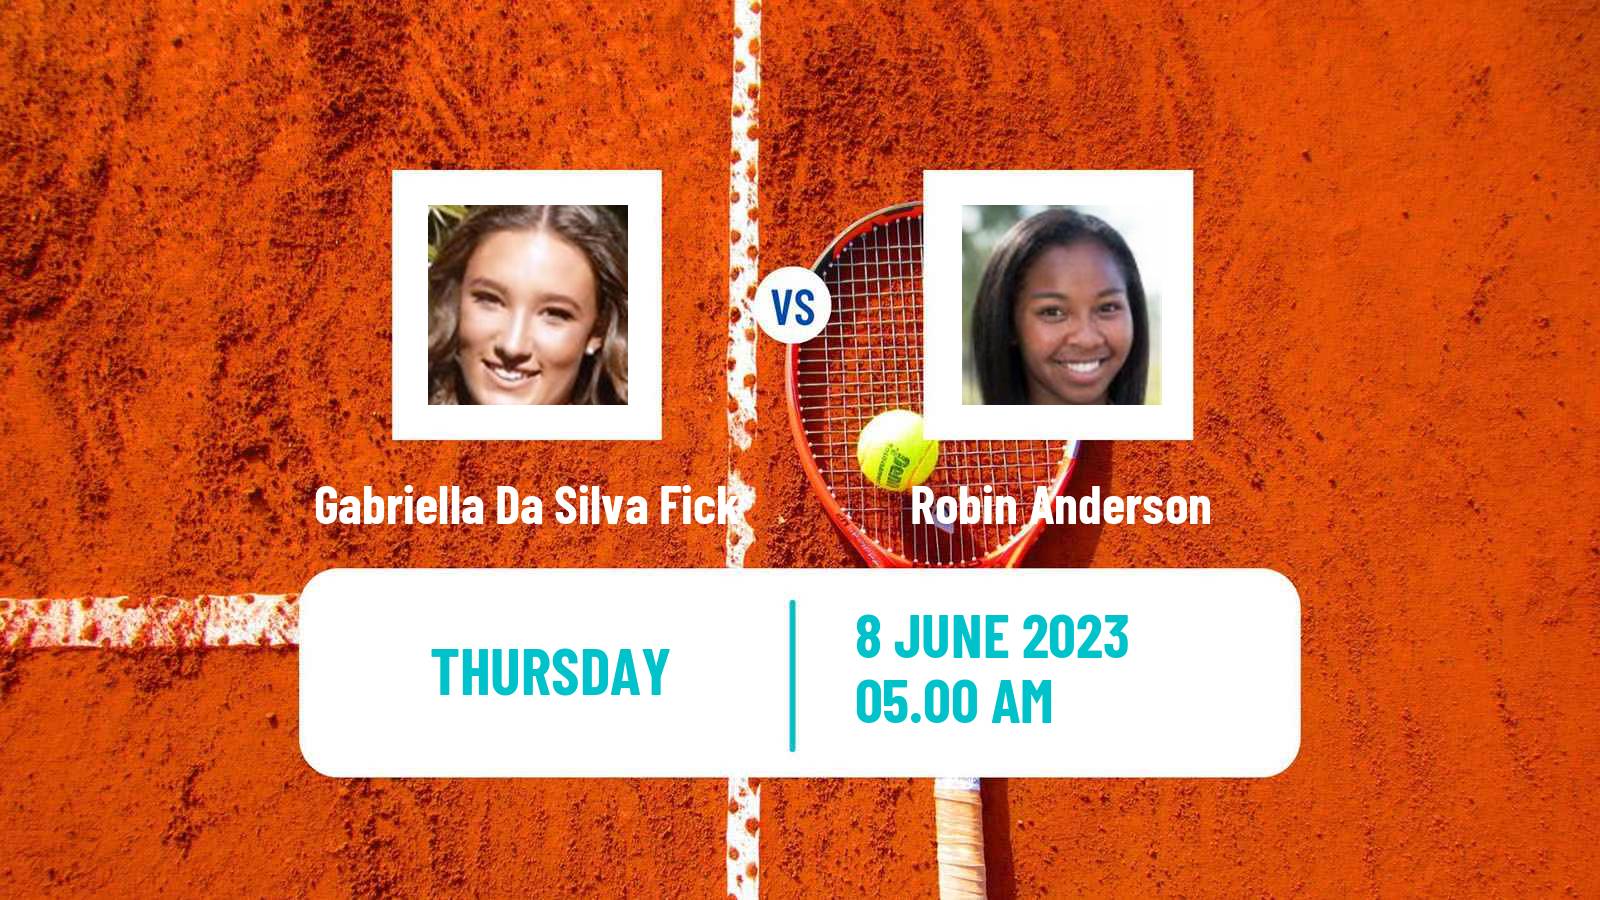 Tennis ITF W25 Setubal Women Gabriella Da Silva Fick - Robin Anderson